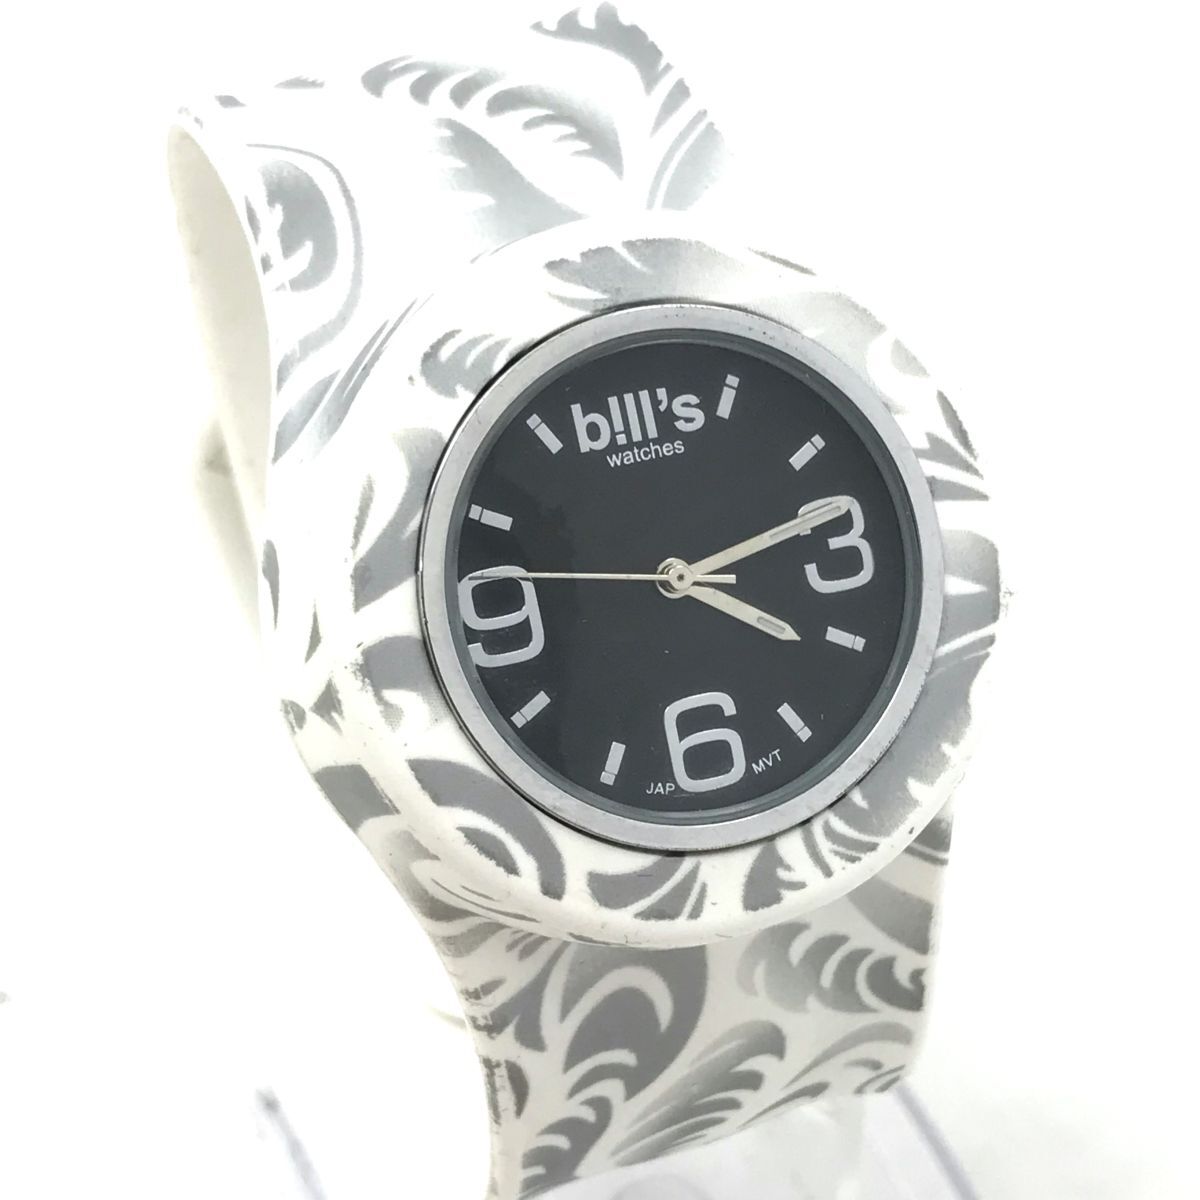 Bill's ビルズ b! 腕時計 クオーツ アナログ ラウンド ホワイト ブラック マーブル 植物 ウォッチ コレクション 電池交換済み 動作確認済みの画像4